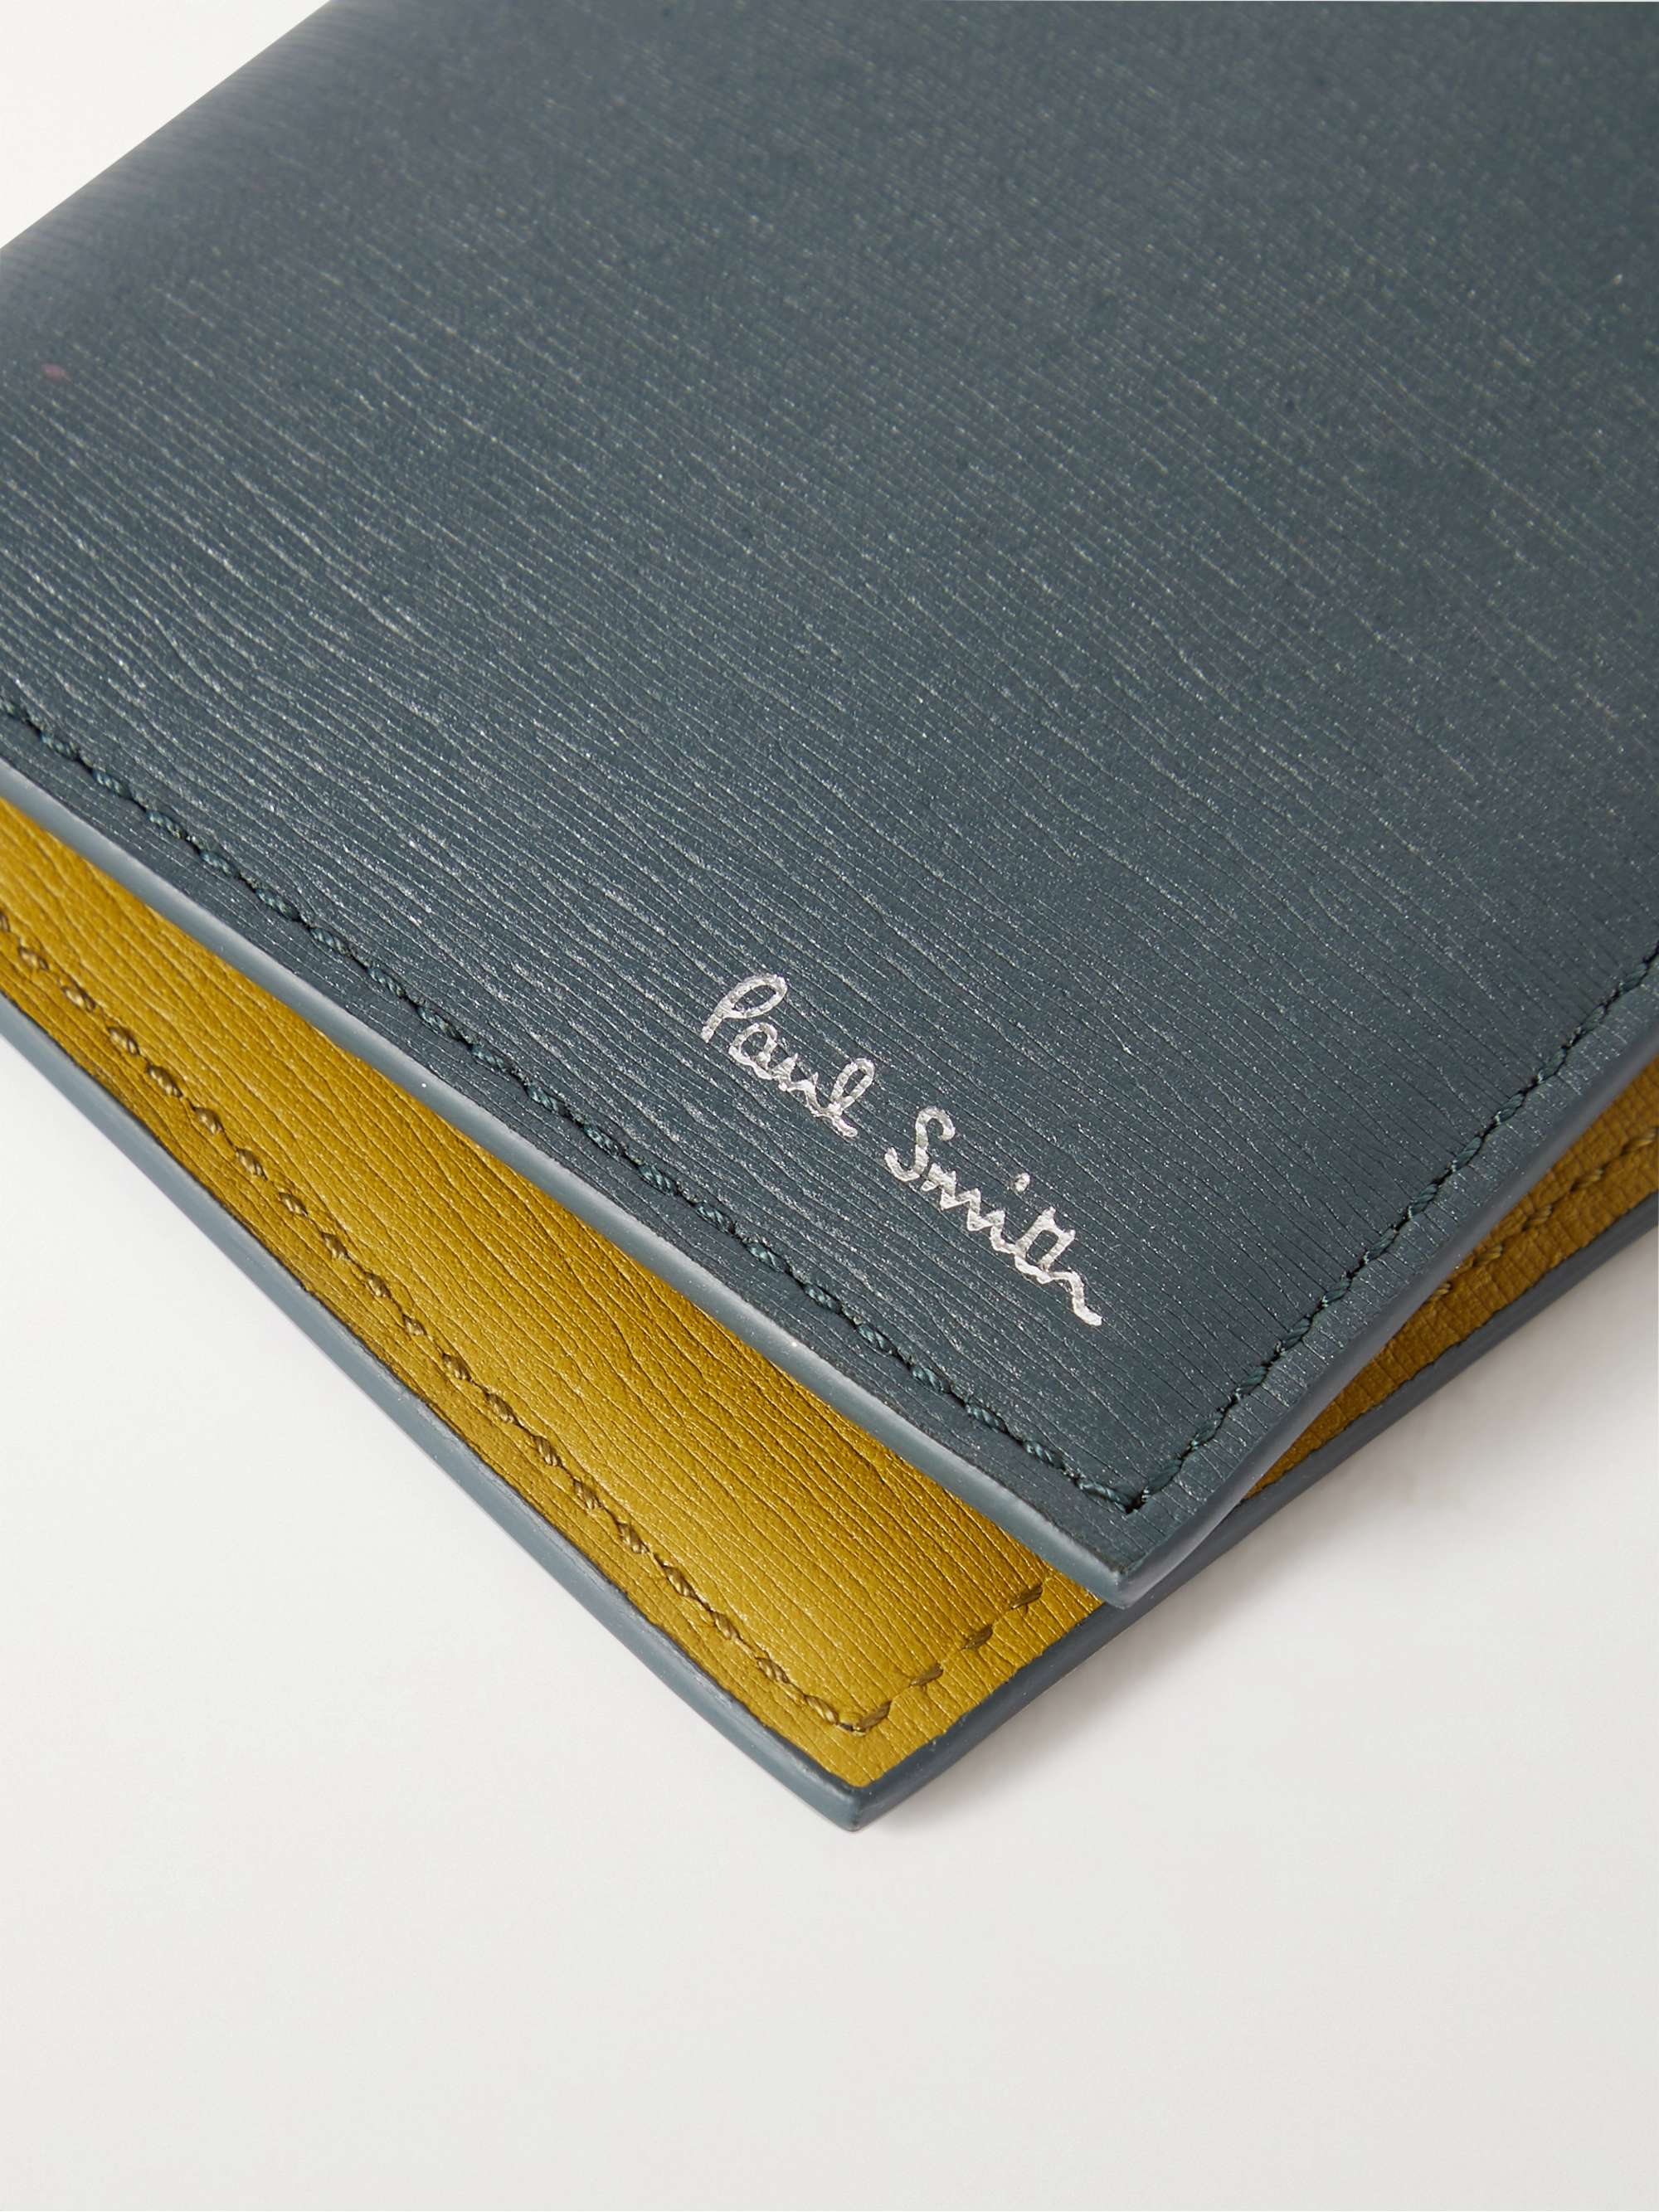 PAUL SMITH Logo-Print Textured-Leather Bifold Cardholder